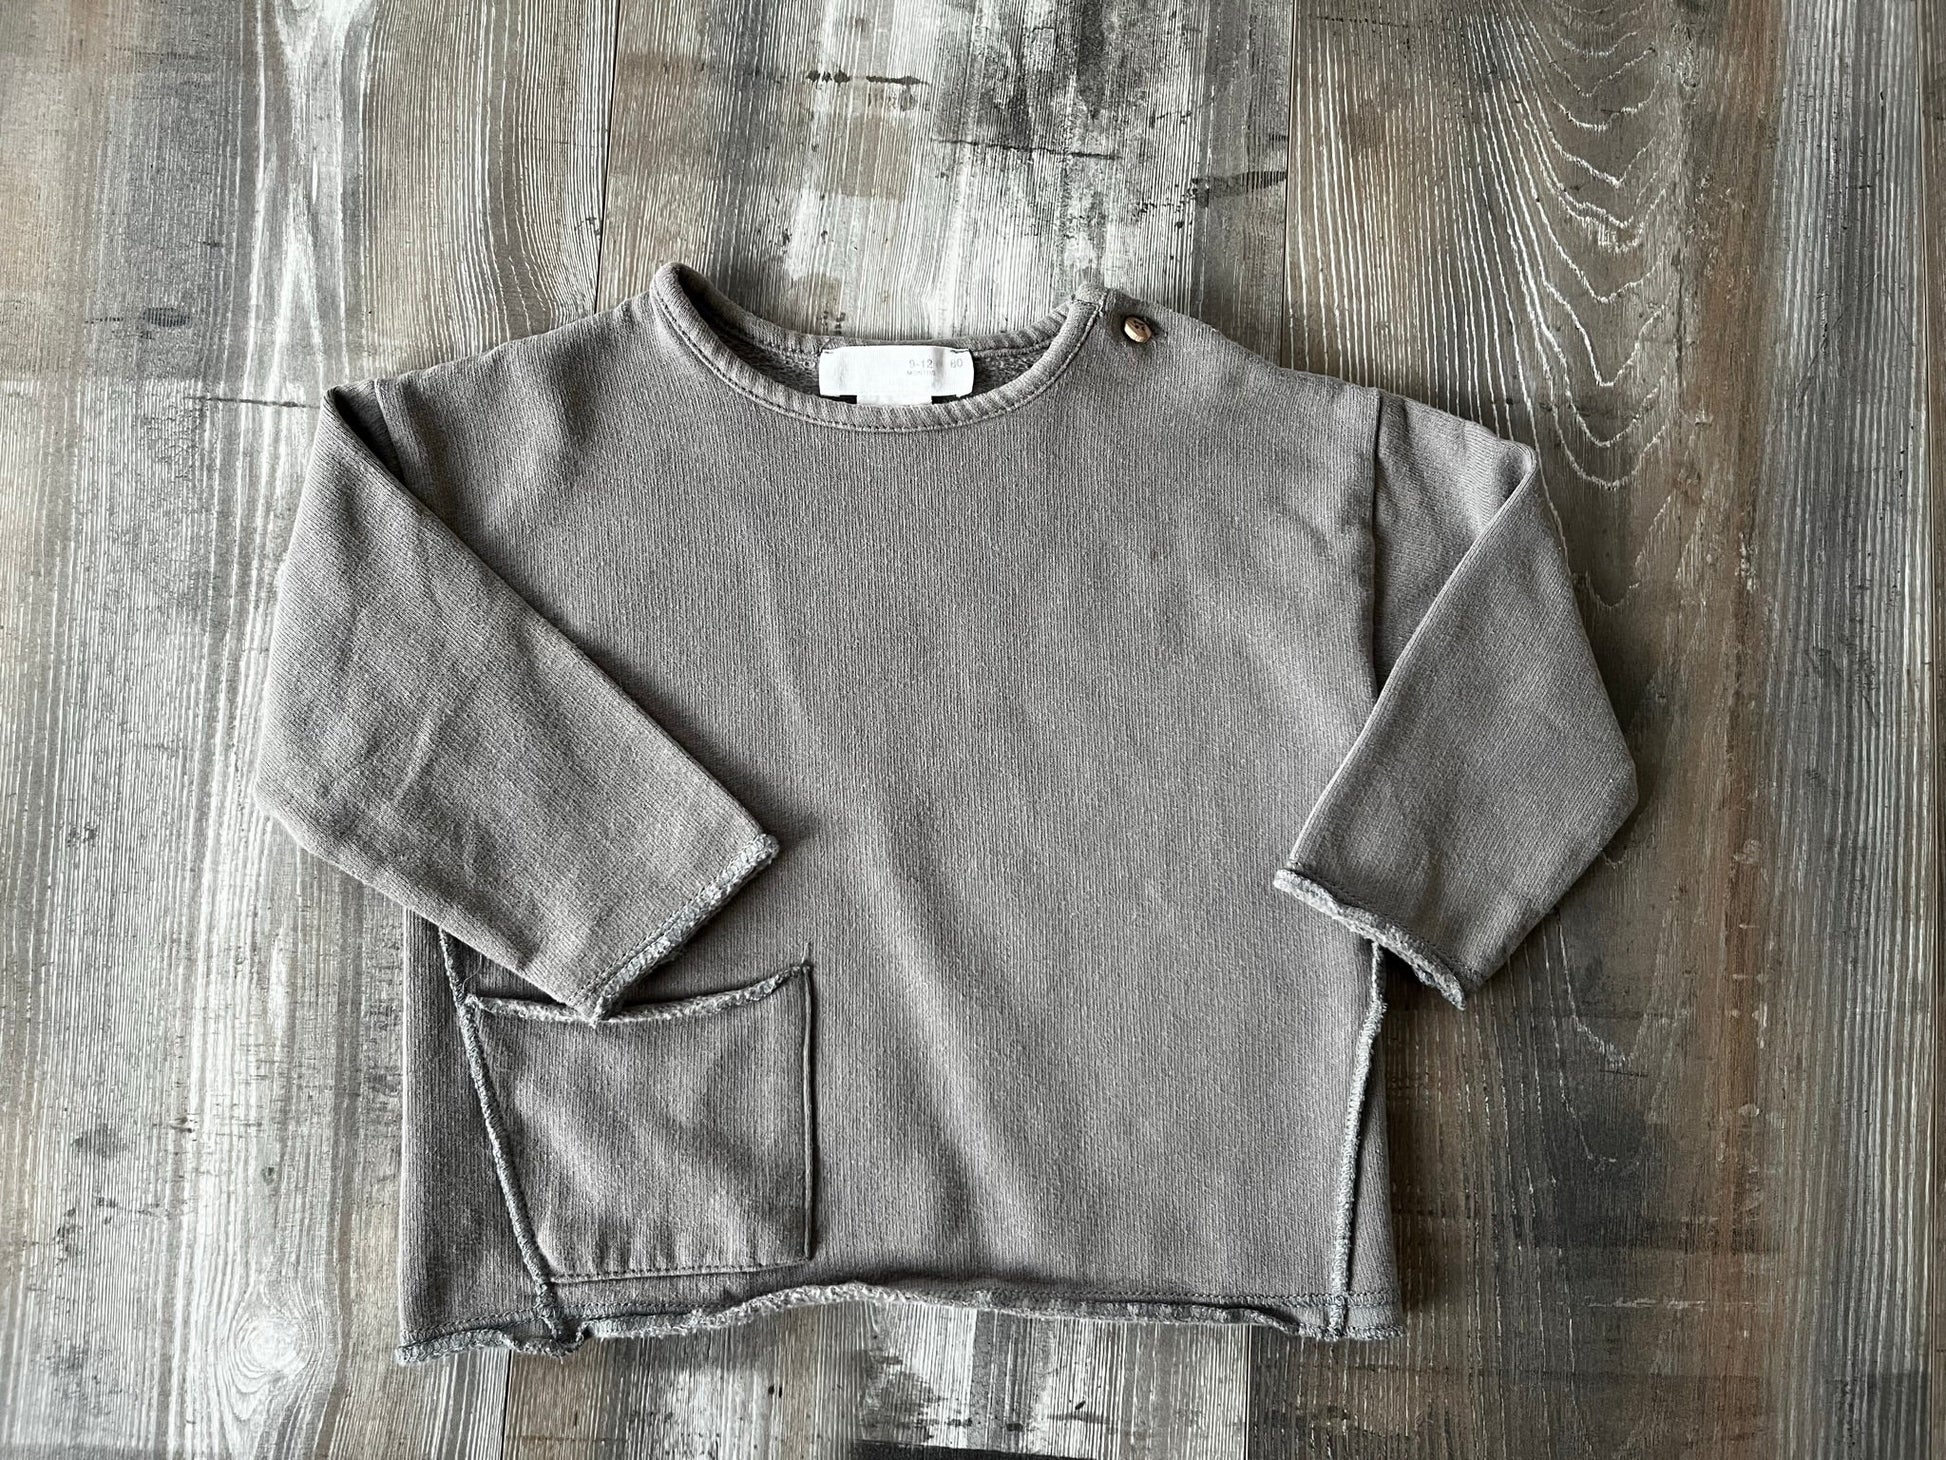 Pullover Grey Stone Wash Zara Gr.80 "Second Hand" - Siliblu Boutique & Atelier